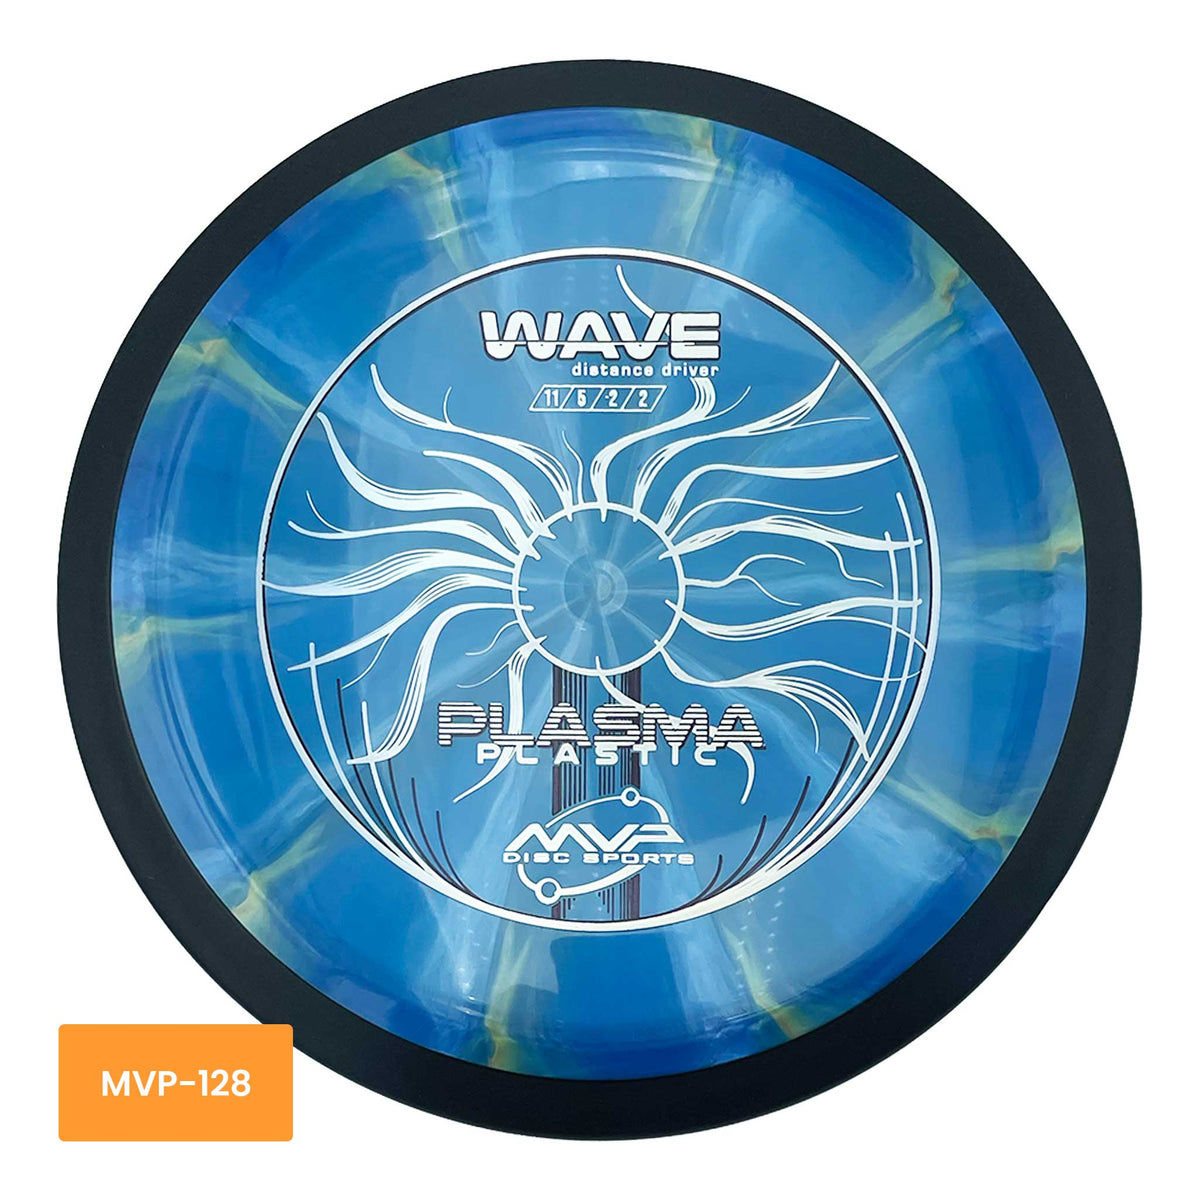 MVP Disc Sports Plasma Wave distance driver - Blue